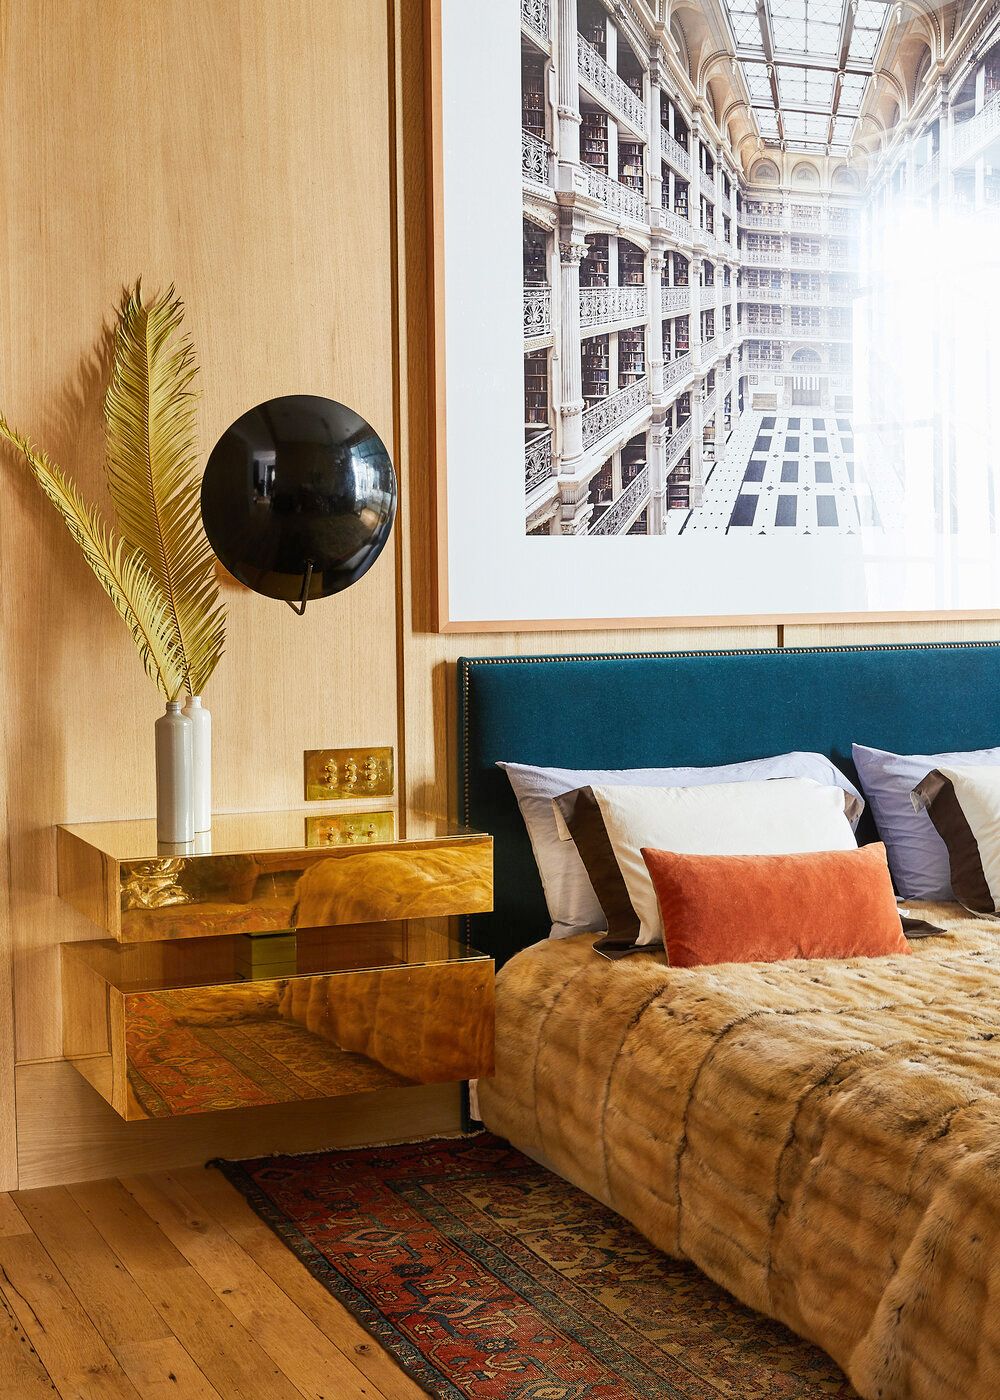 Best Bedroom Setup Ideas Collection - House Decor Concept Ideas